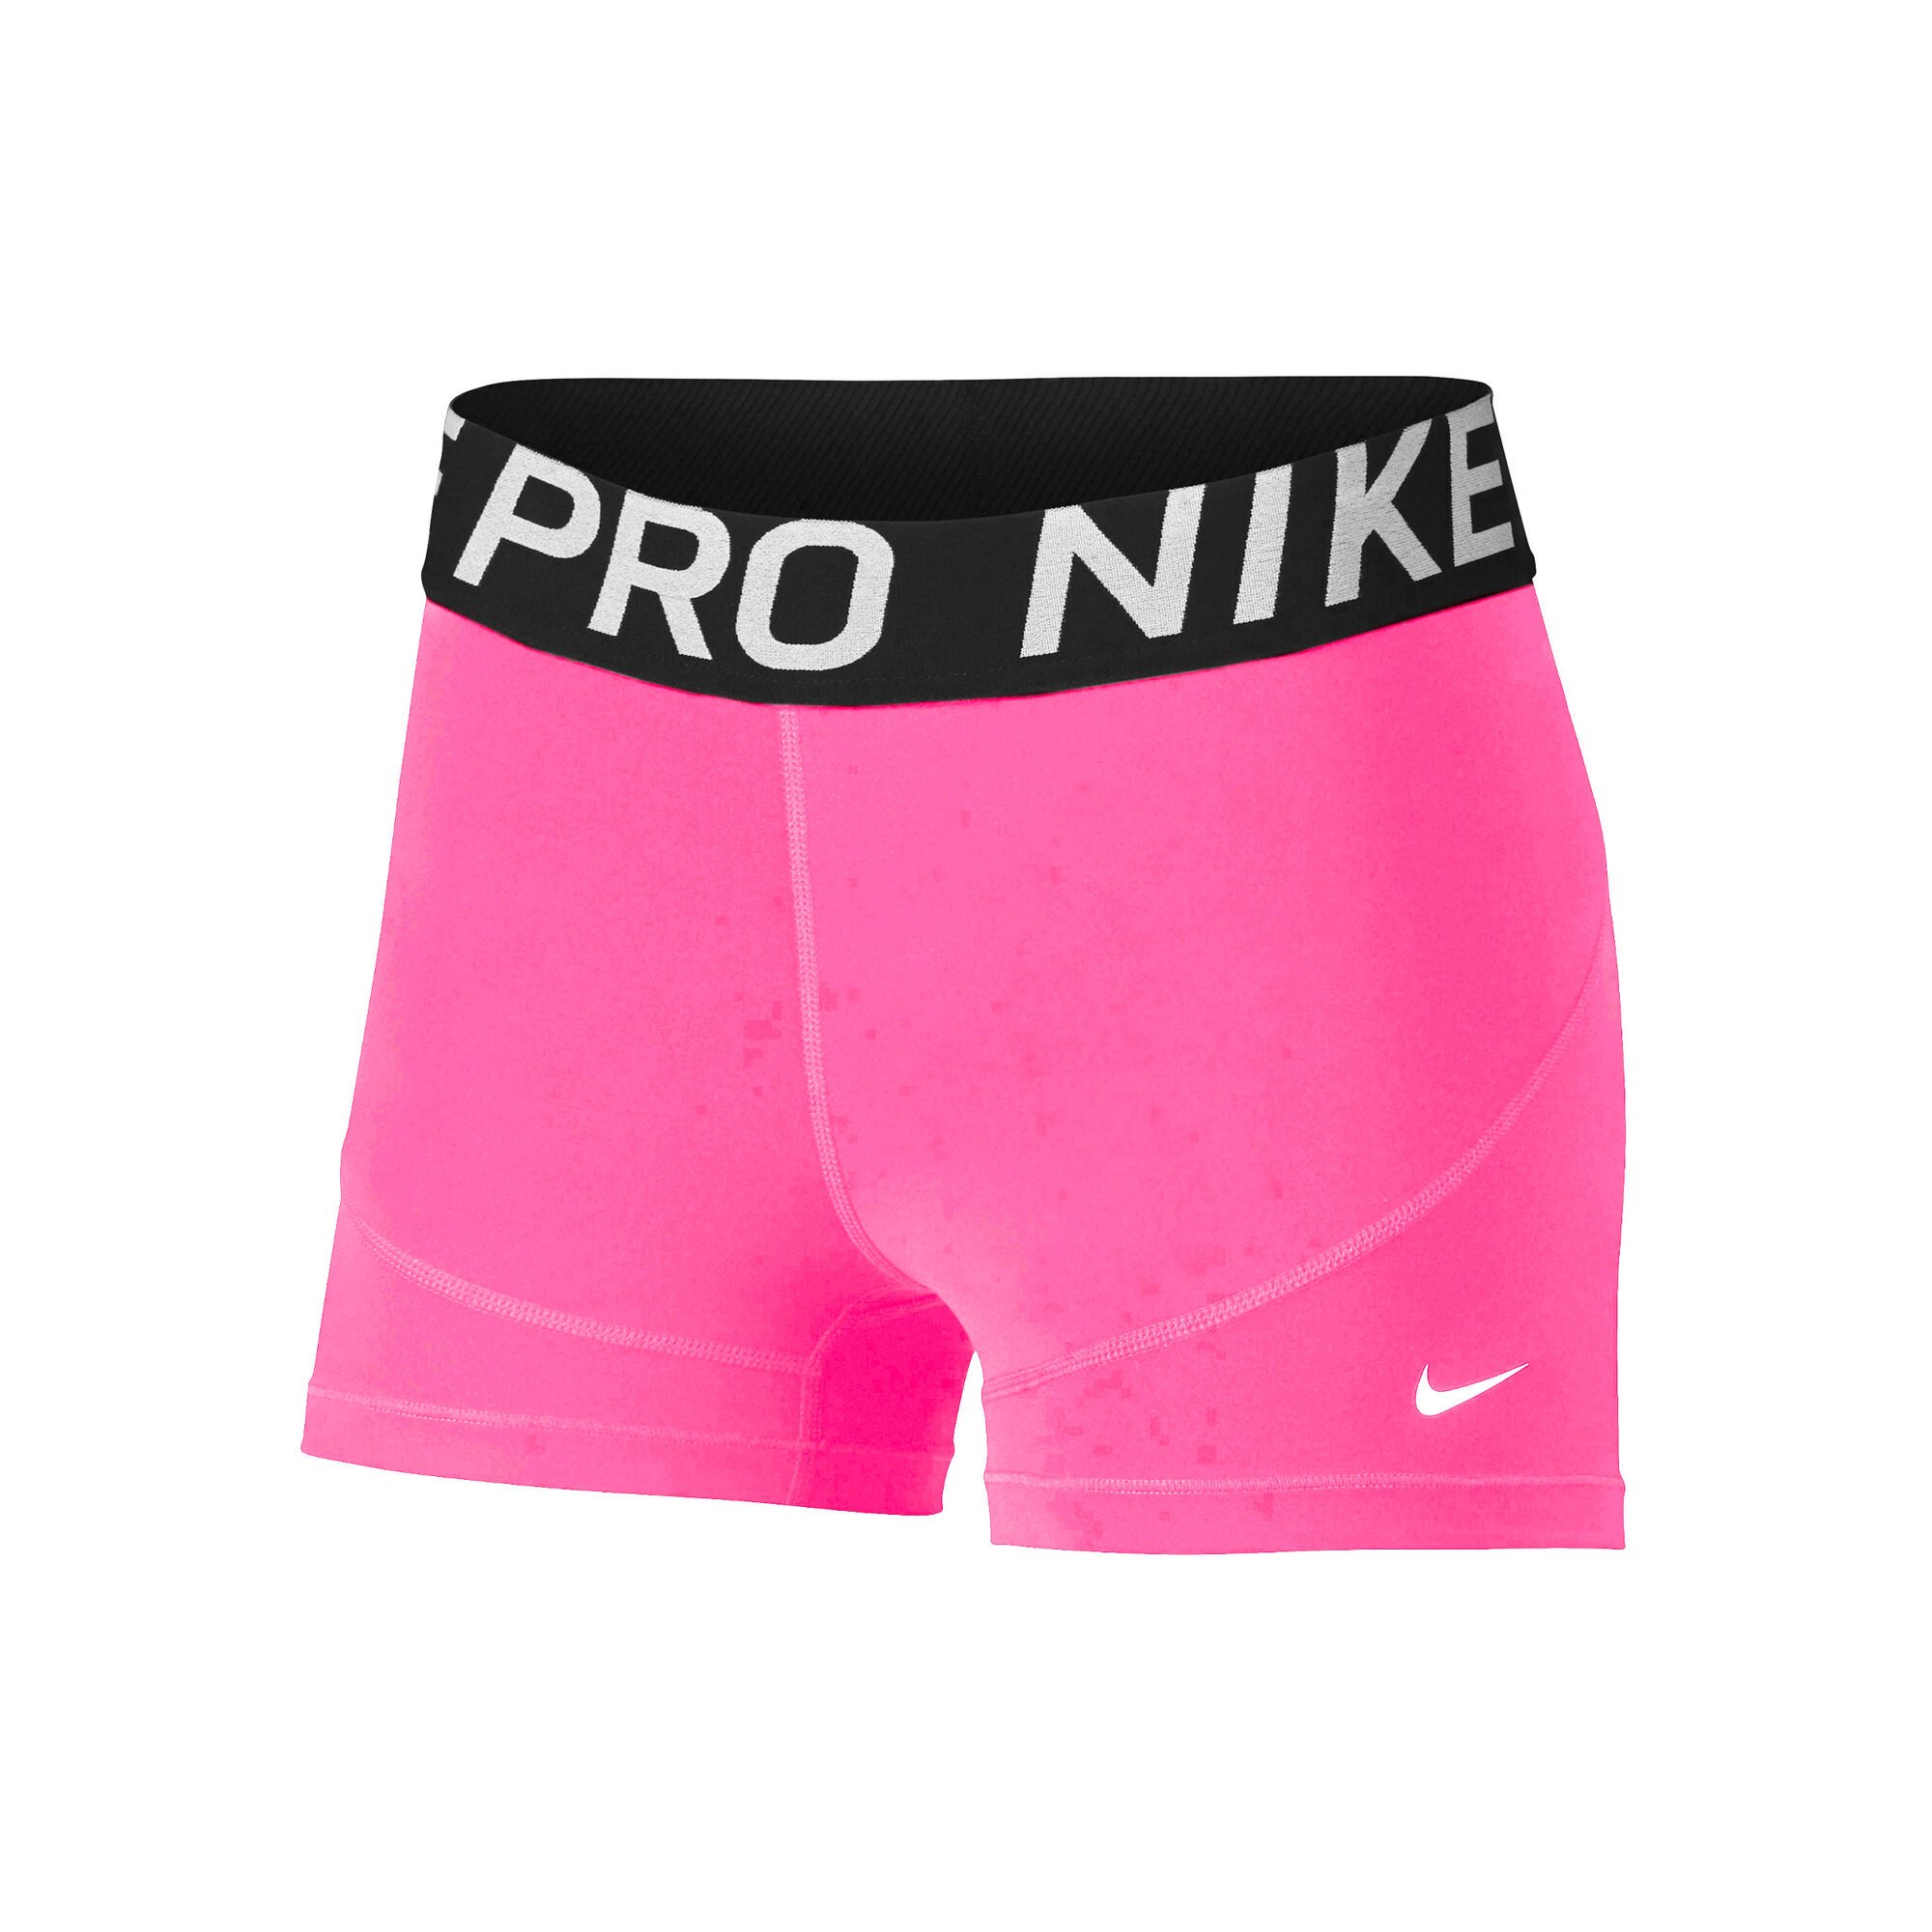 Girls Neon Pink Sports Shorts